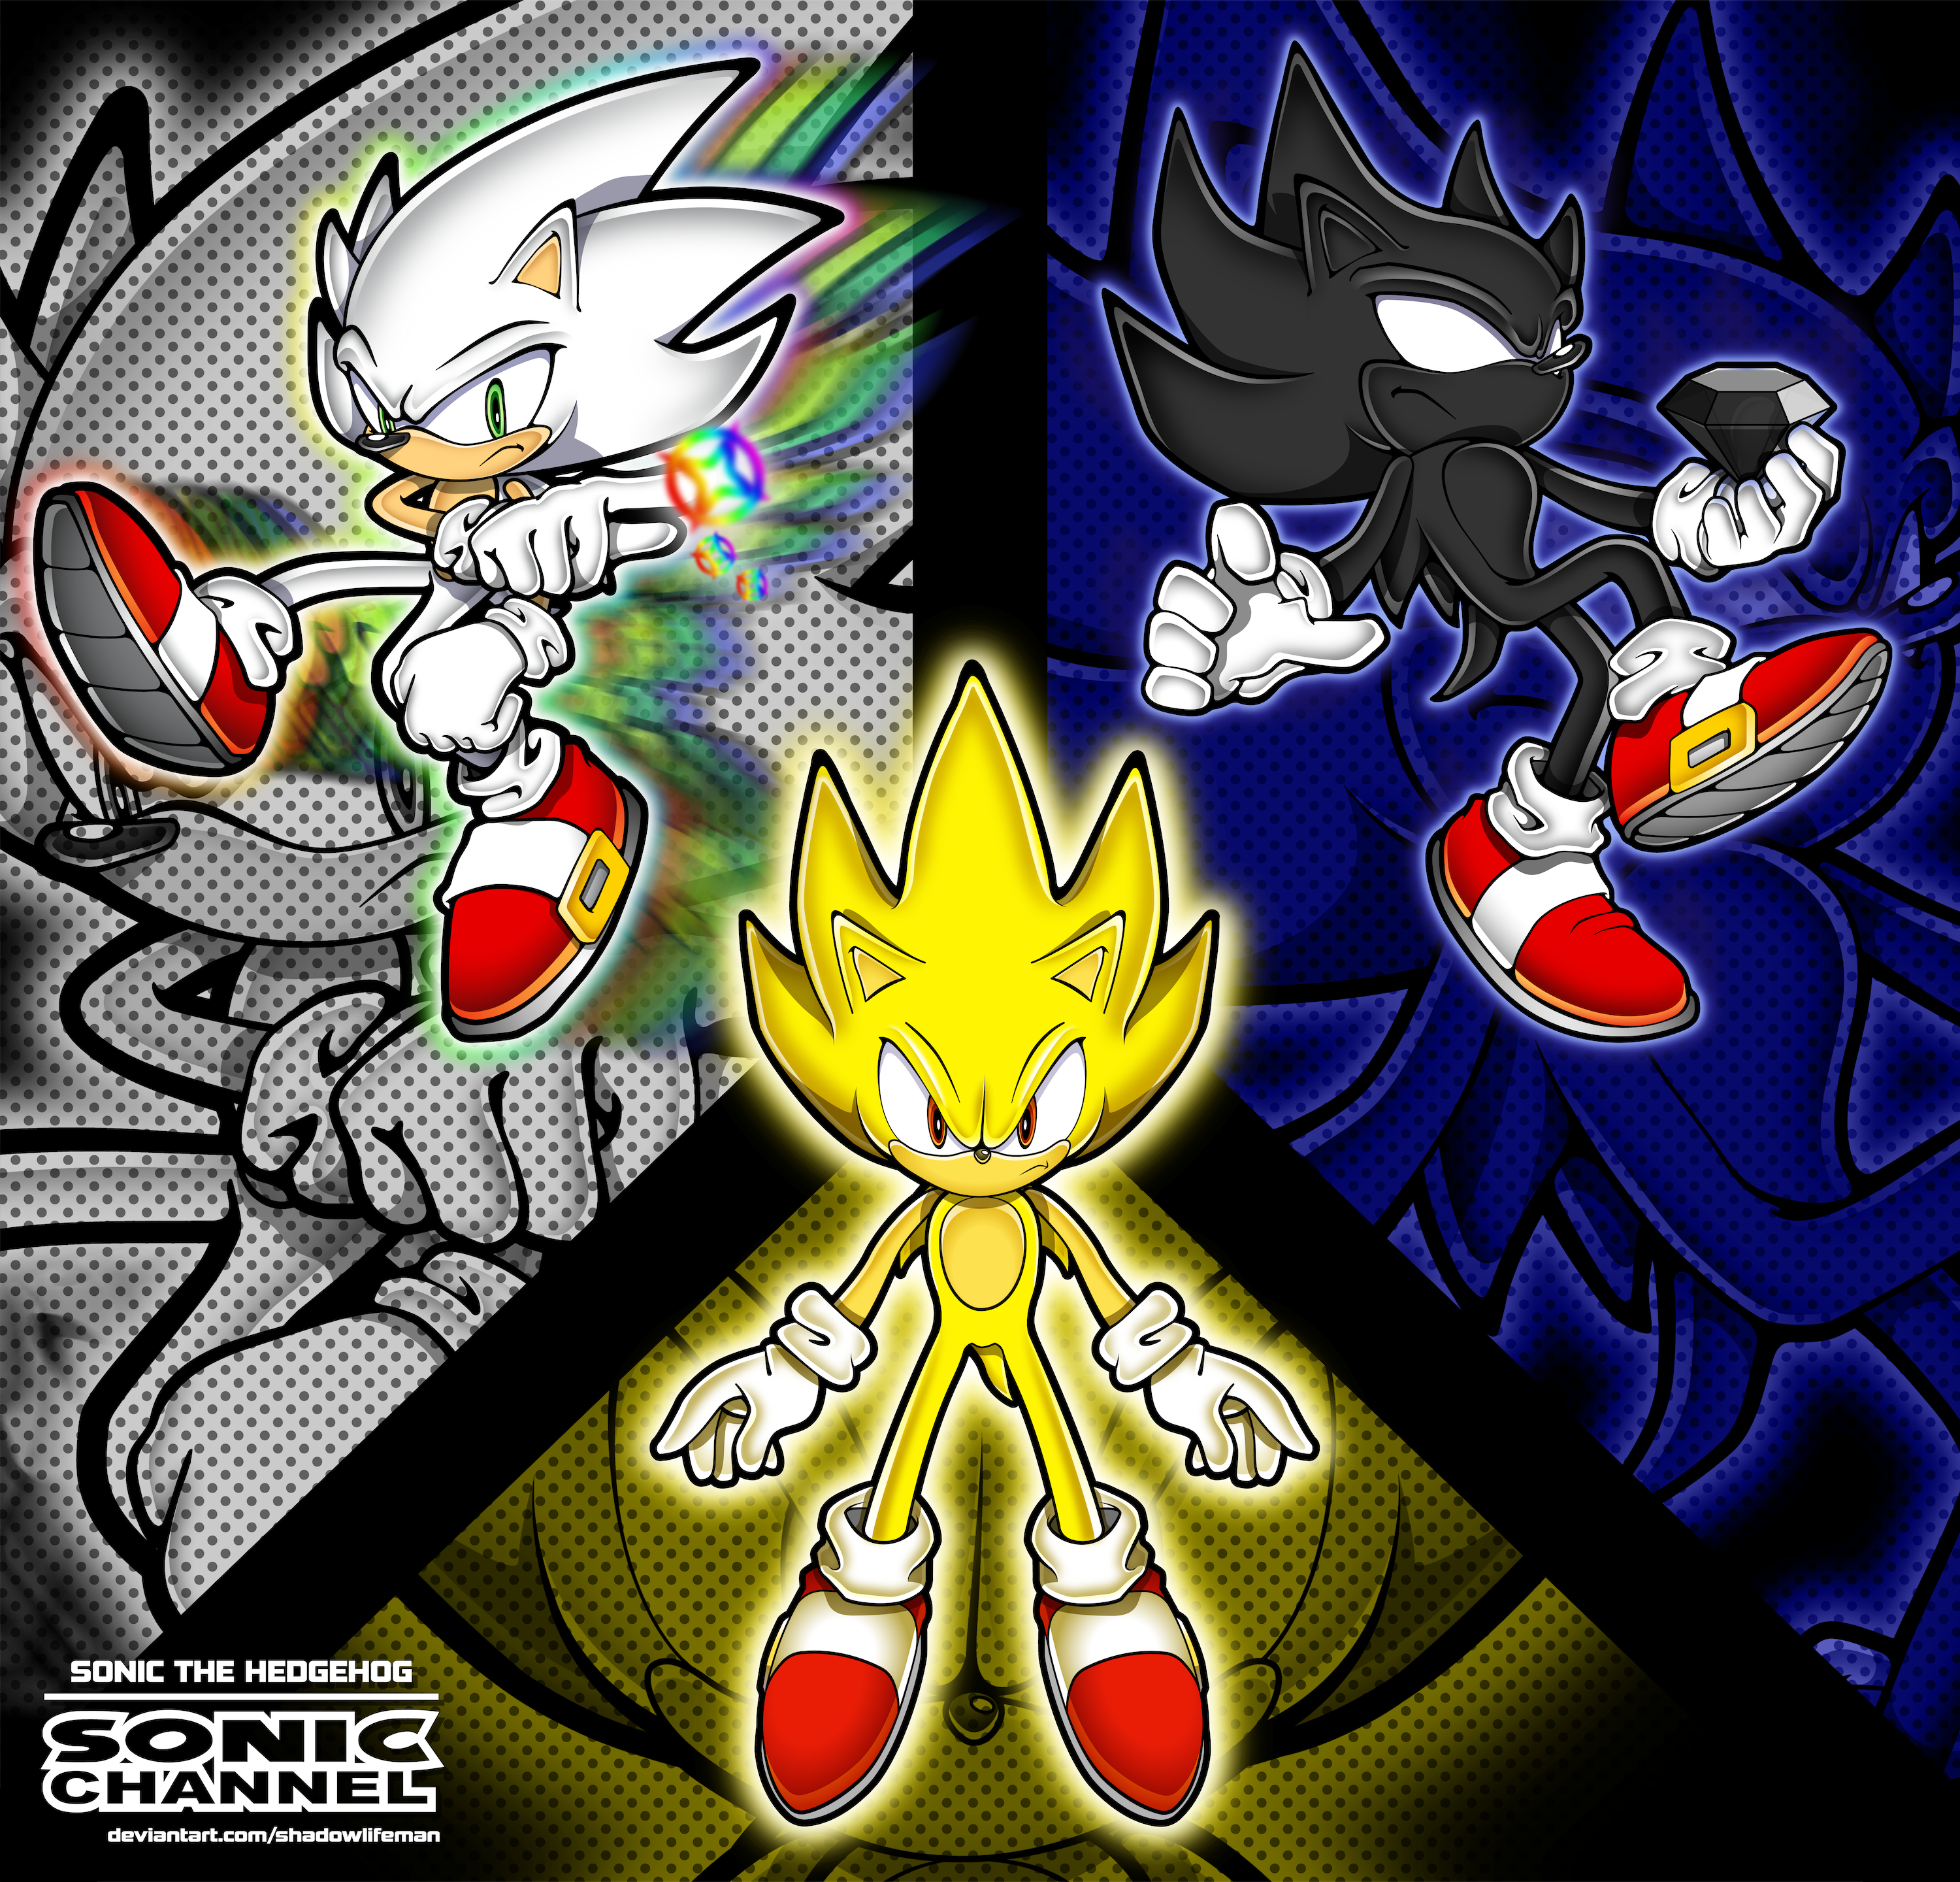 Sonic the Hedgehog - Sonic Adventure 2 by ShadowLifeman on DeviantArt